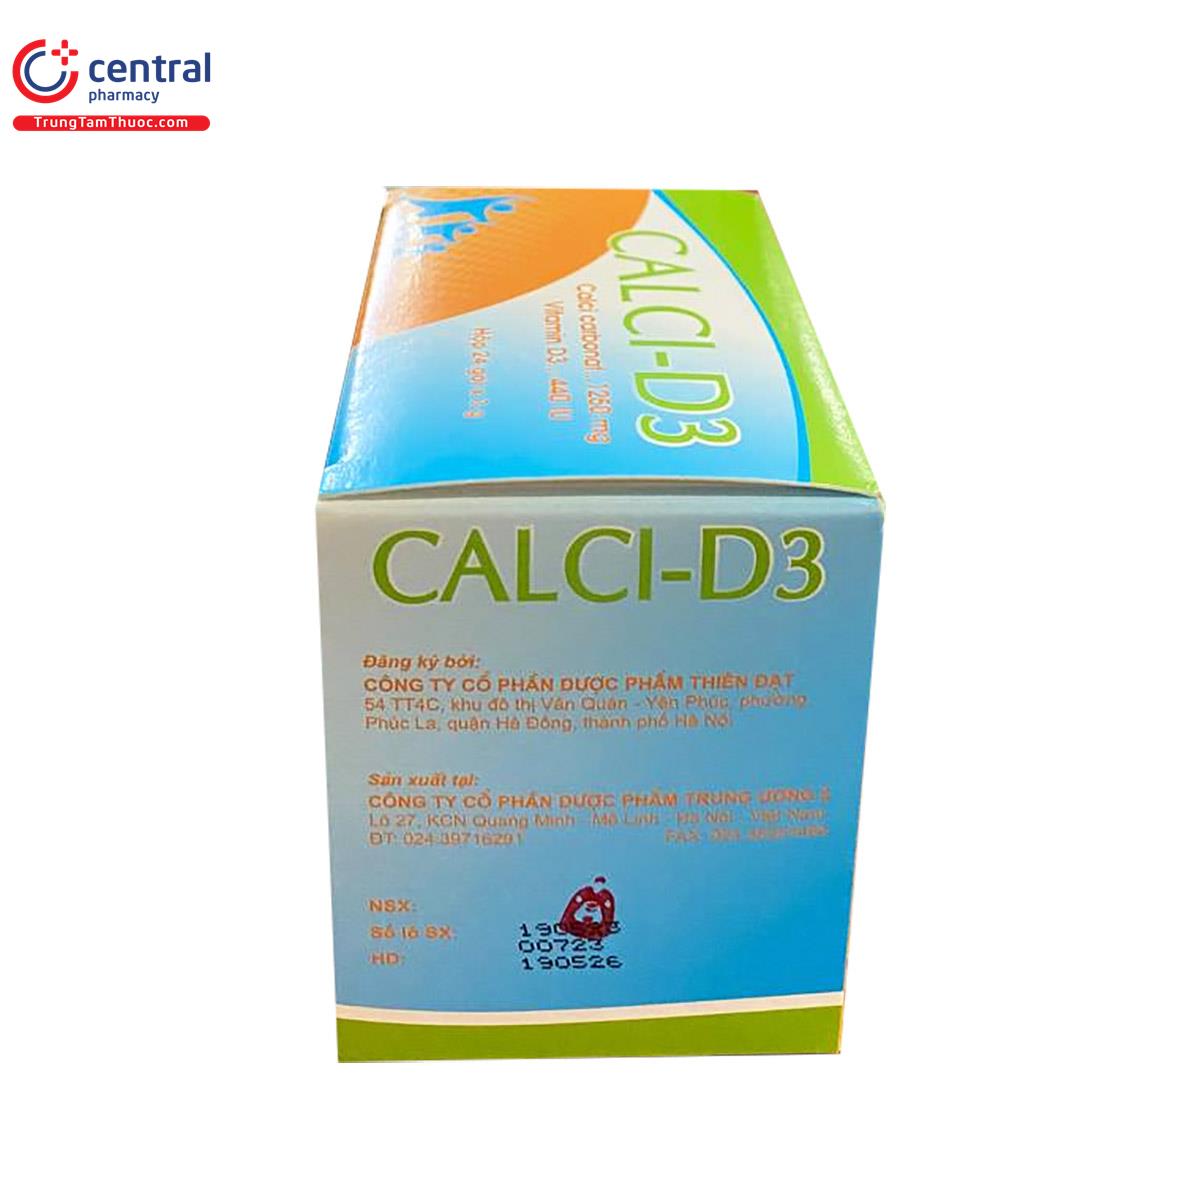 Calci-D3 Dopharma